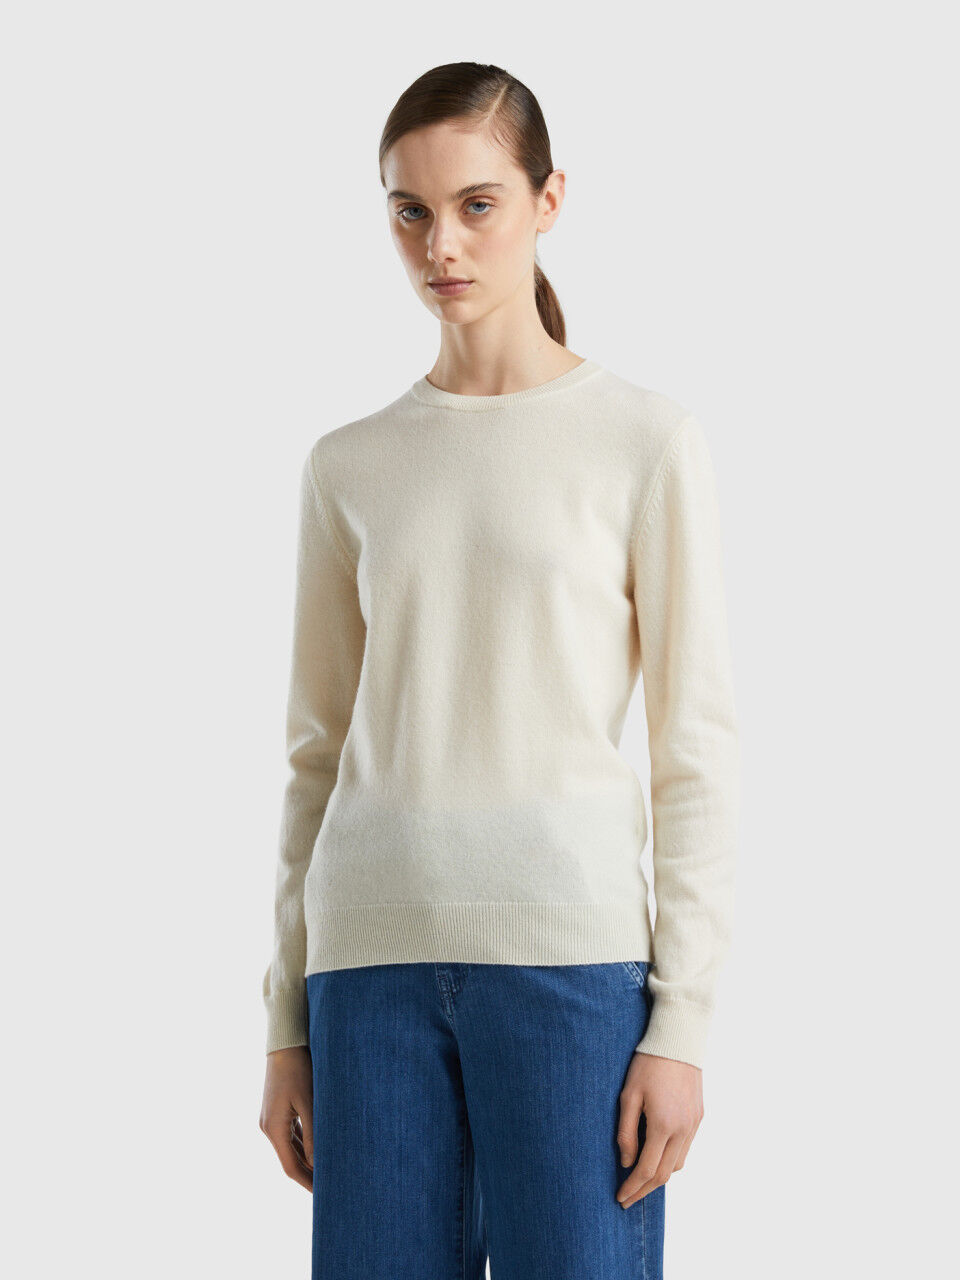 Cream crew neck sweater in Merino wool